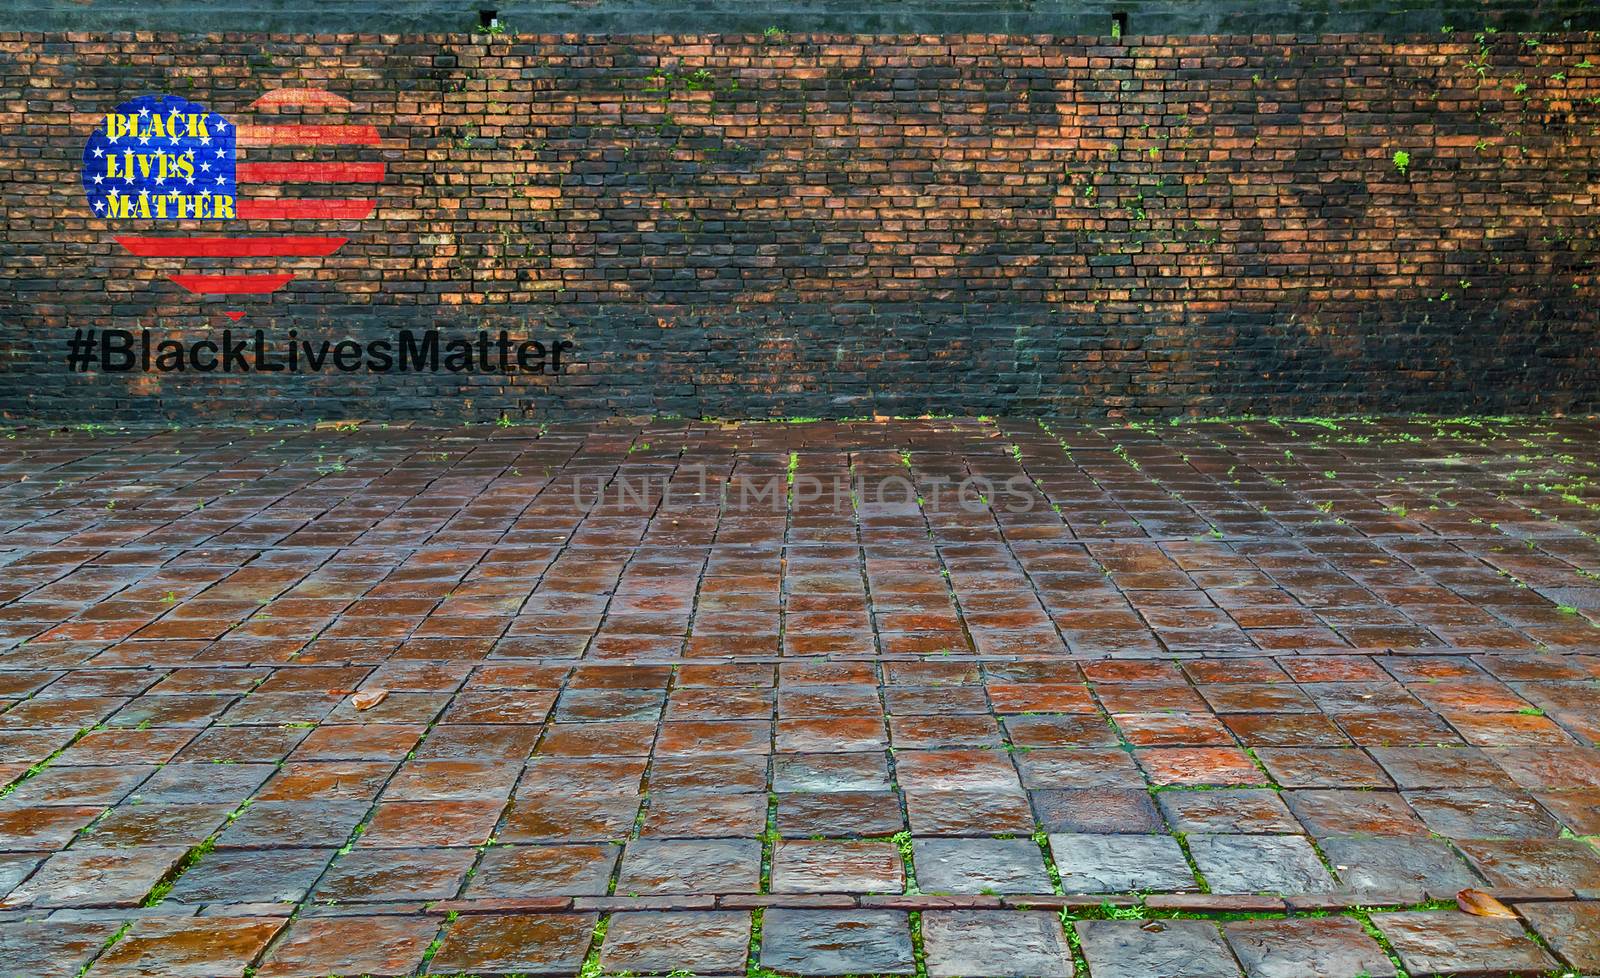 Black Lives Matter slogan hashtag liberation banner protestors heart stencil on American flag USA city street brick dirty old wall.